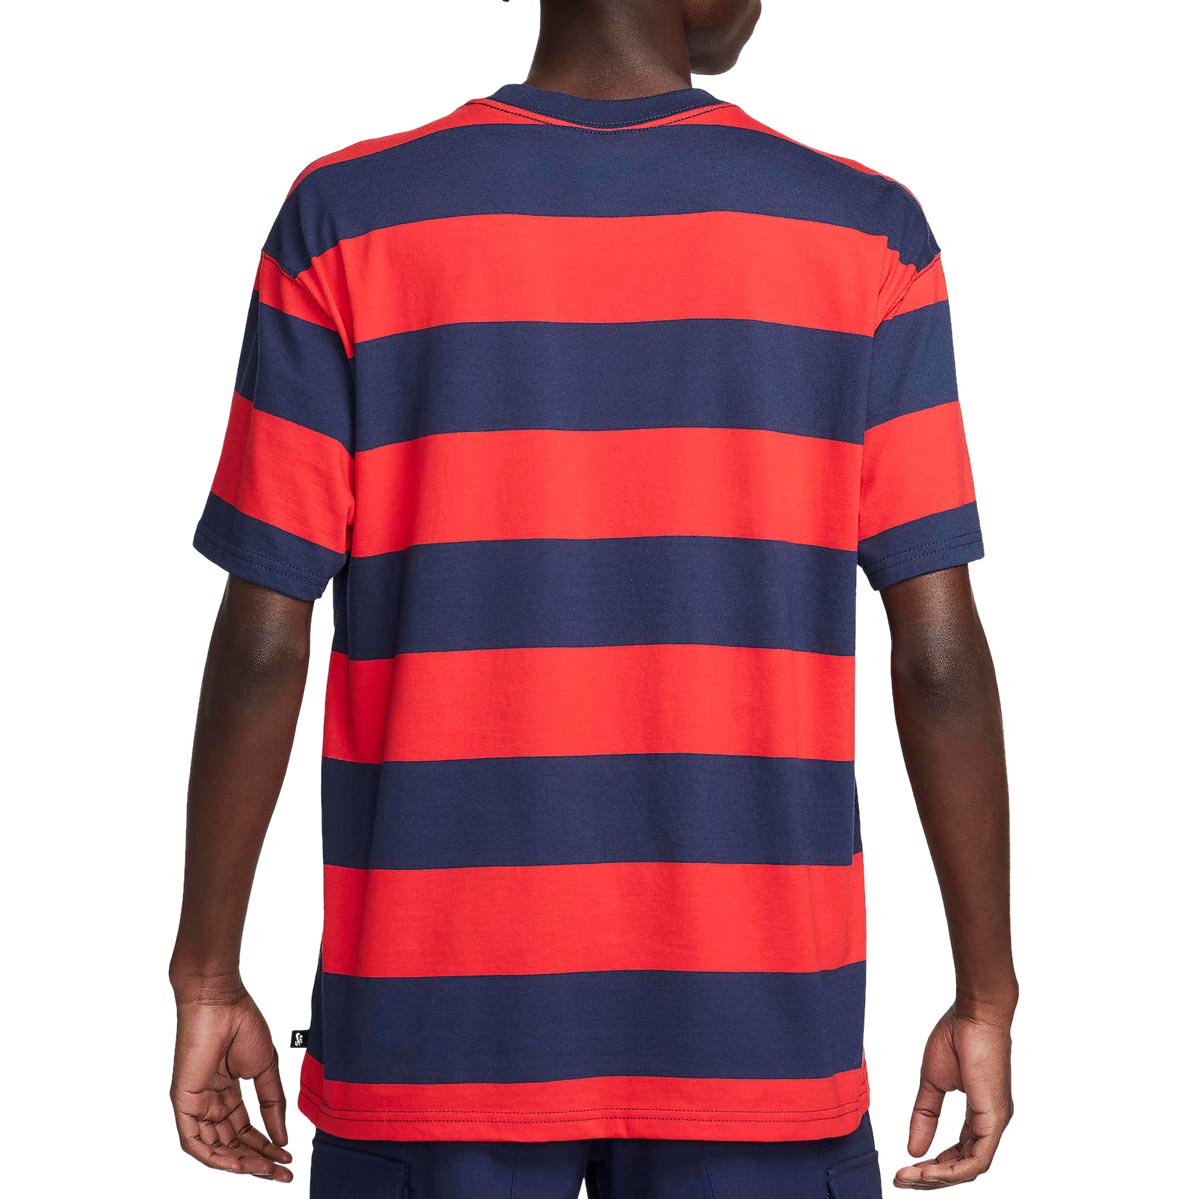 Nike SB Striped T-Shirt - University Red image 3